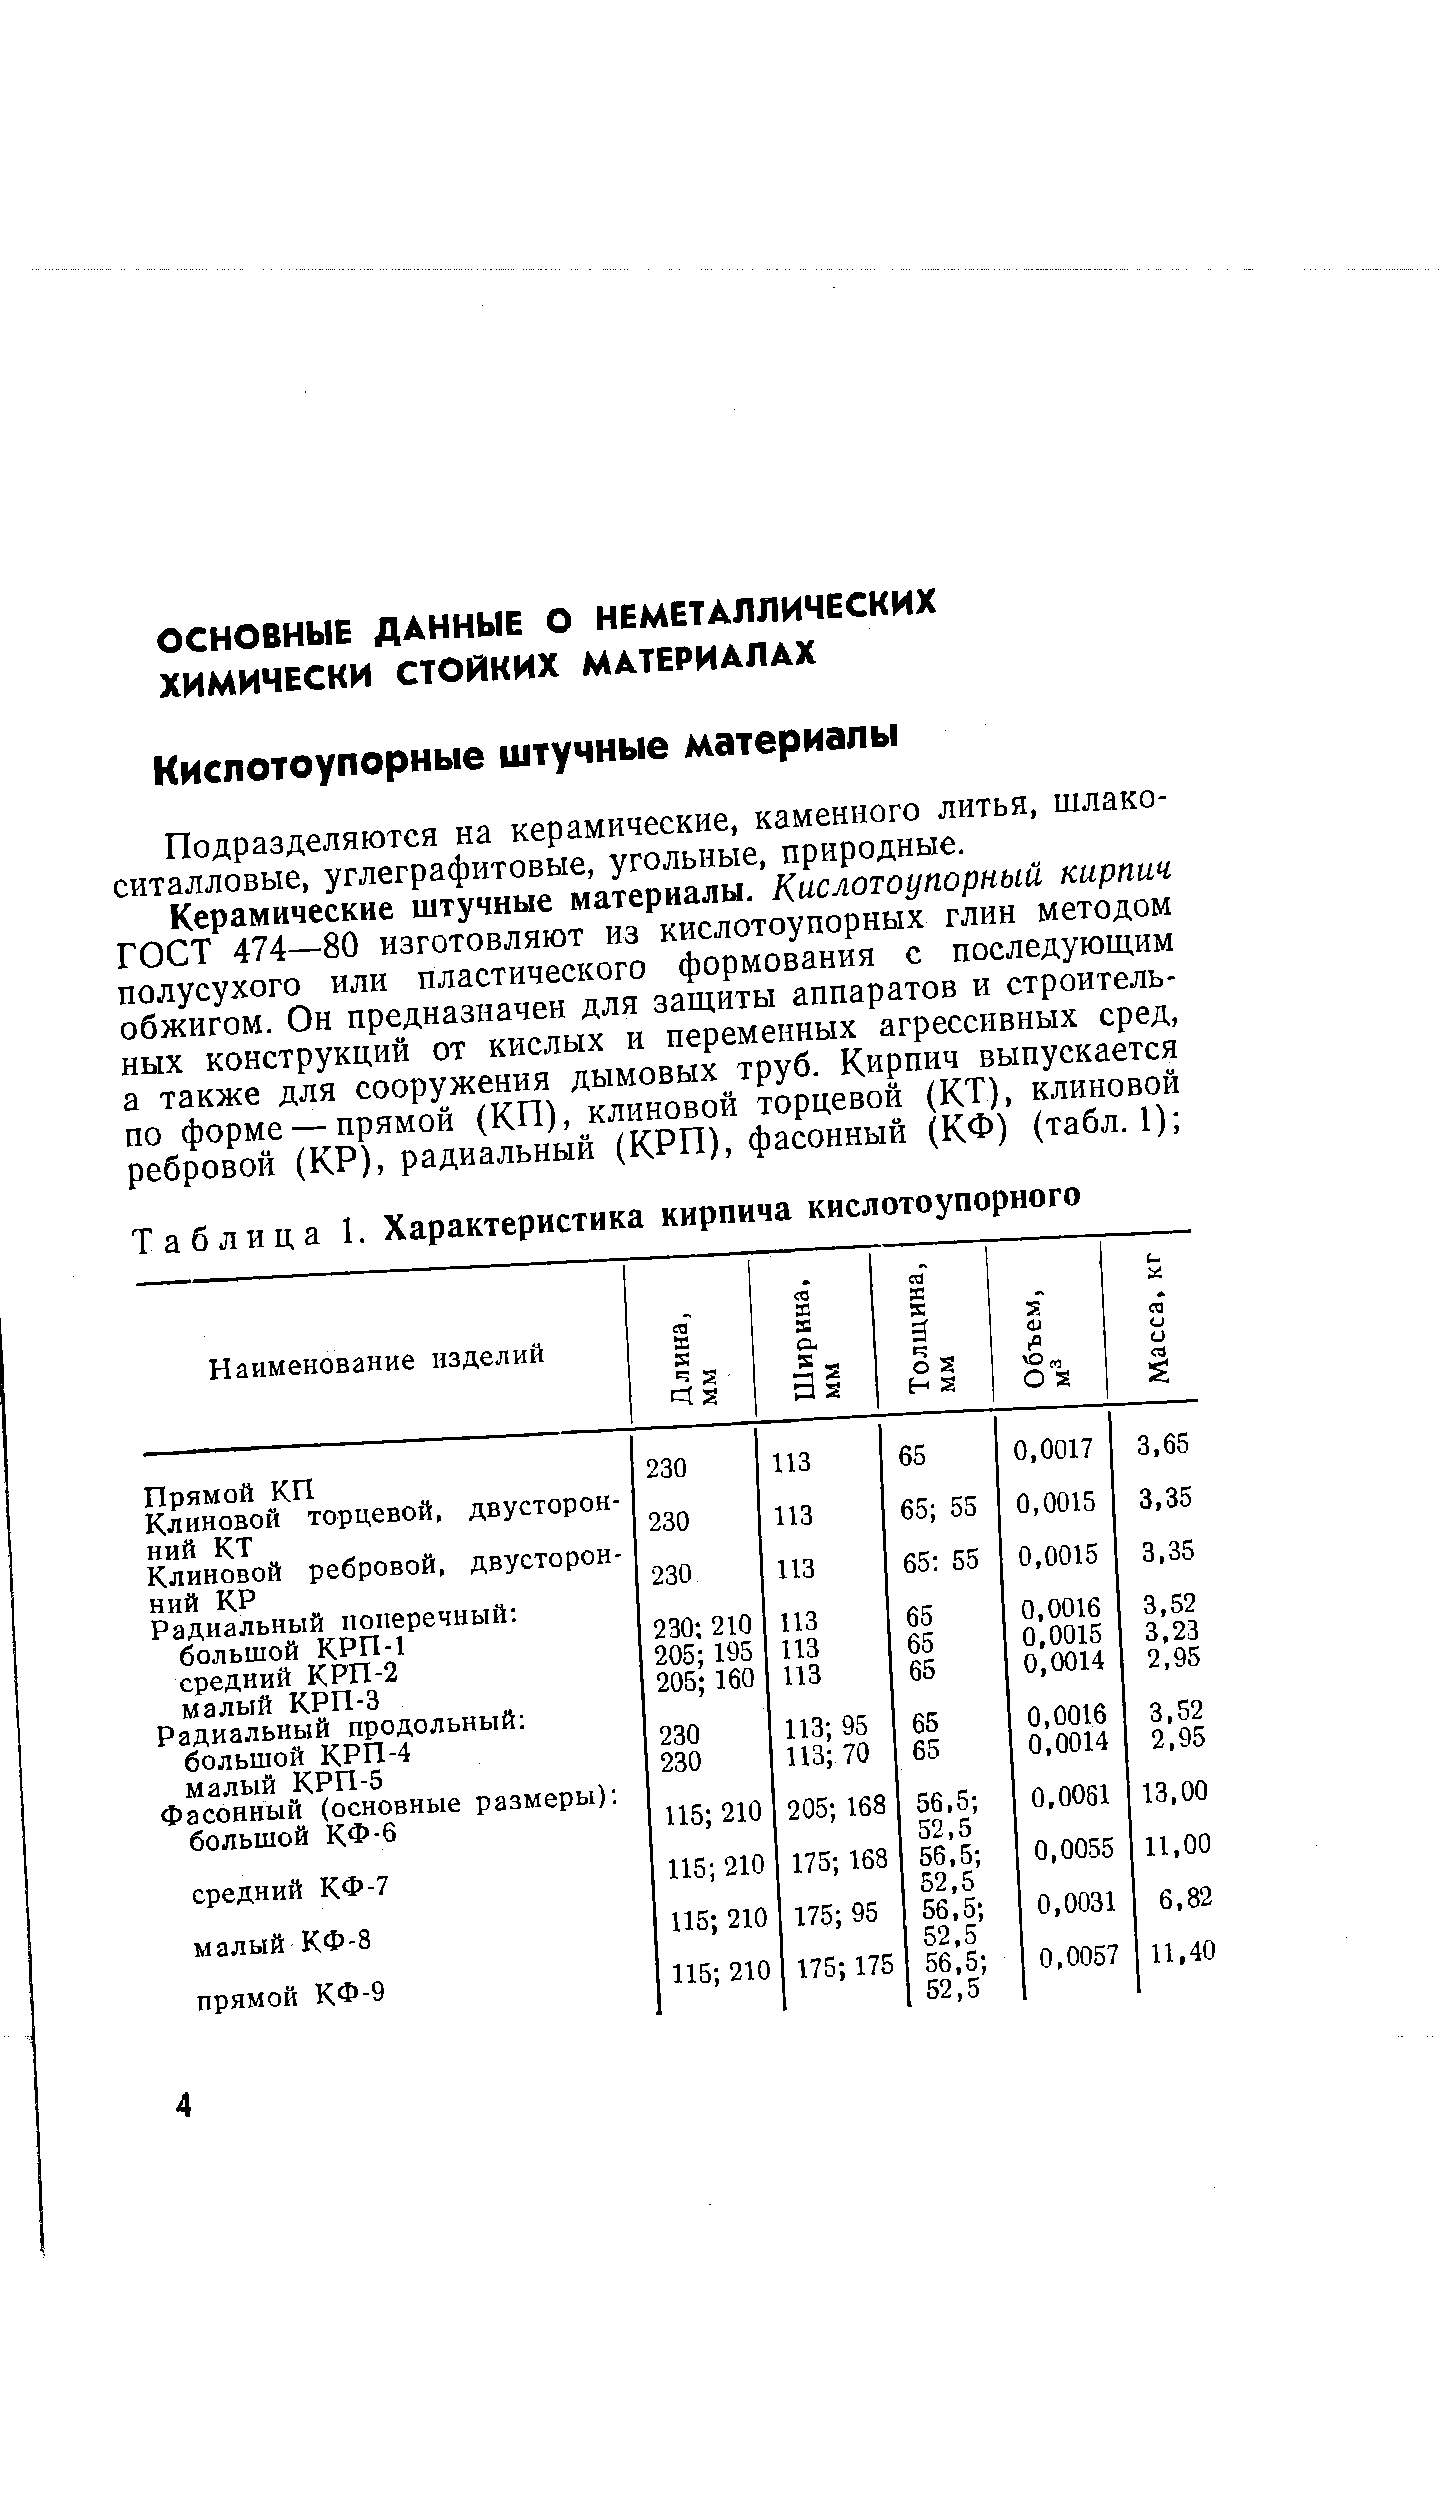 Таблица 1. Характеристика кирпича кислотоупорного
